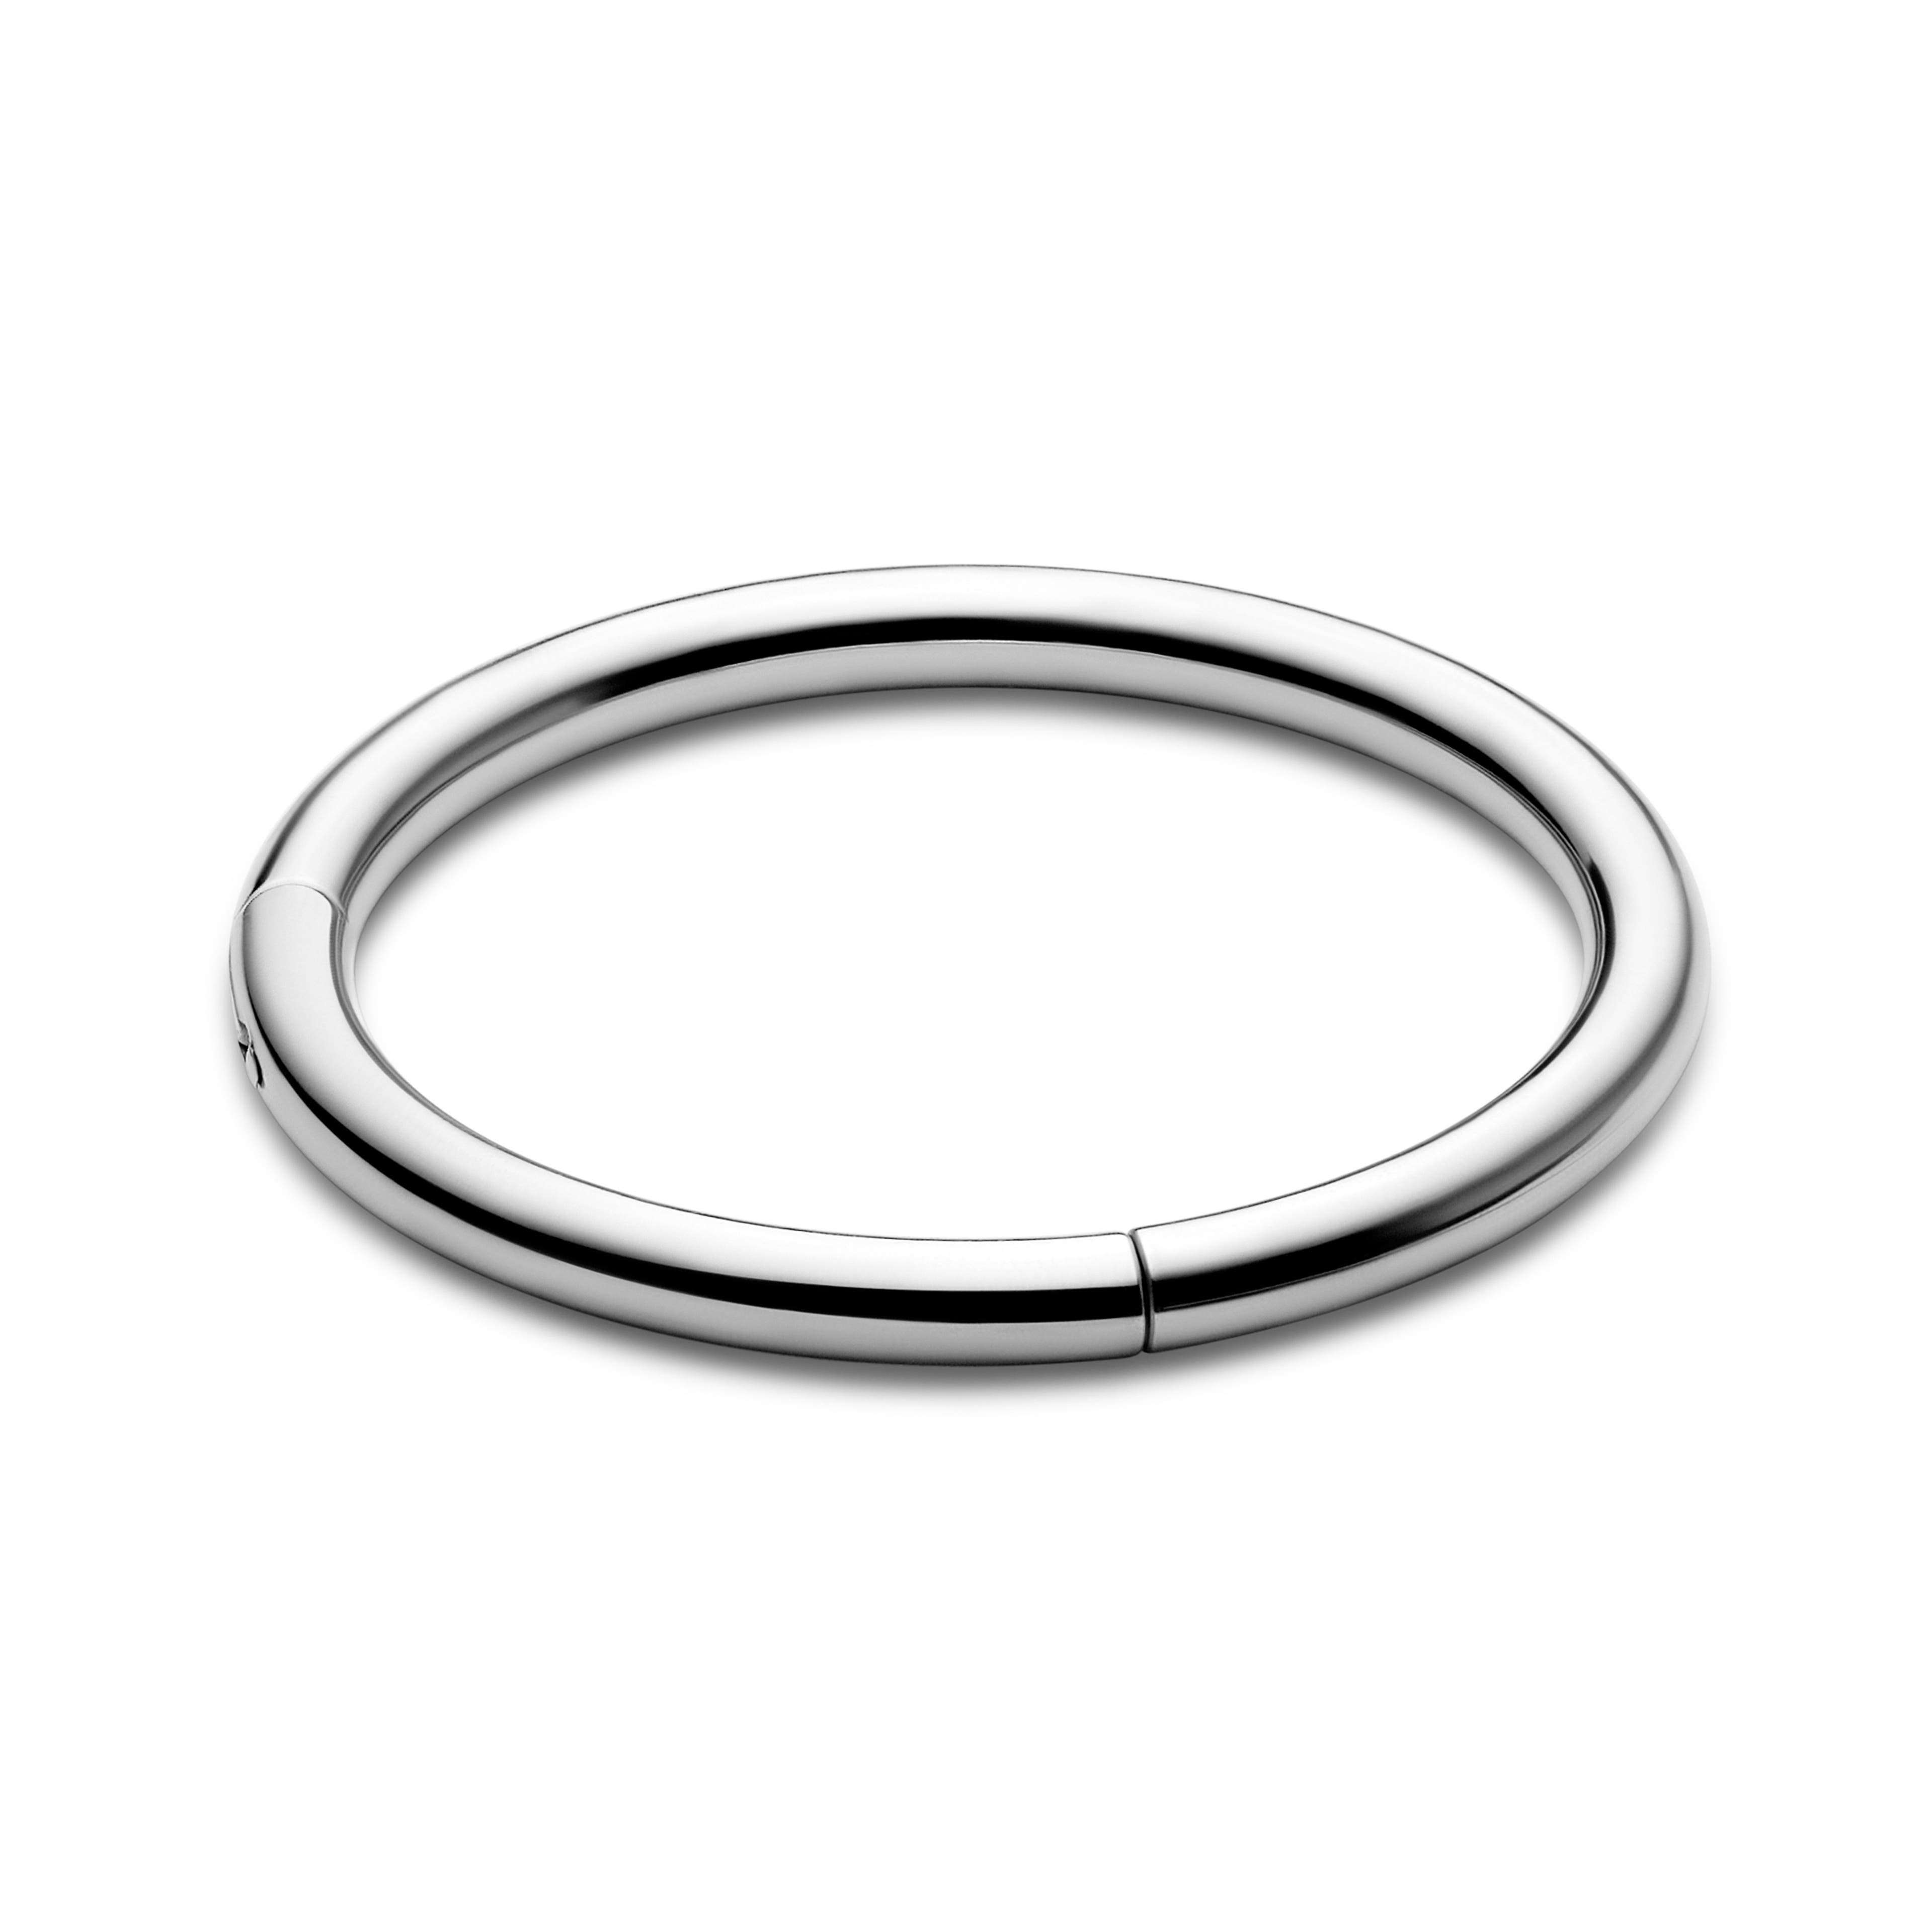 8 mm Silberfarbener Titan-Piercing-Ring